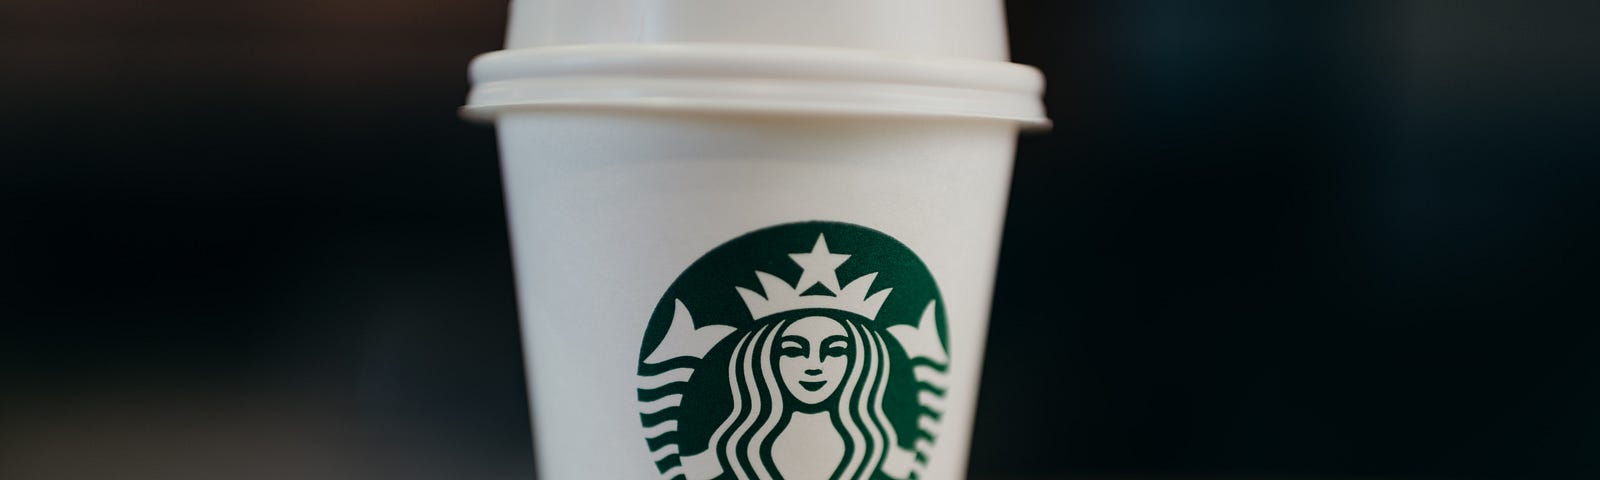 why is Starbucks so popular